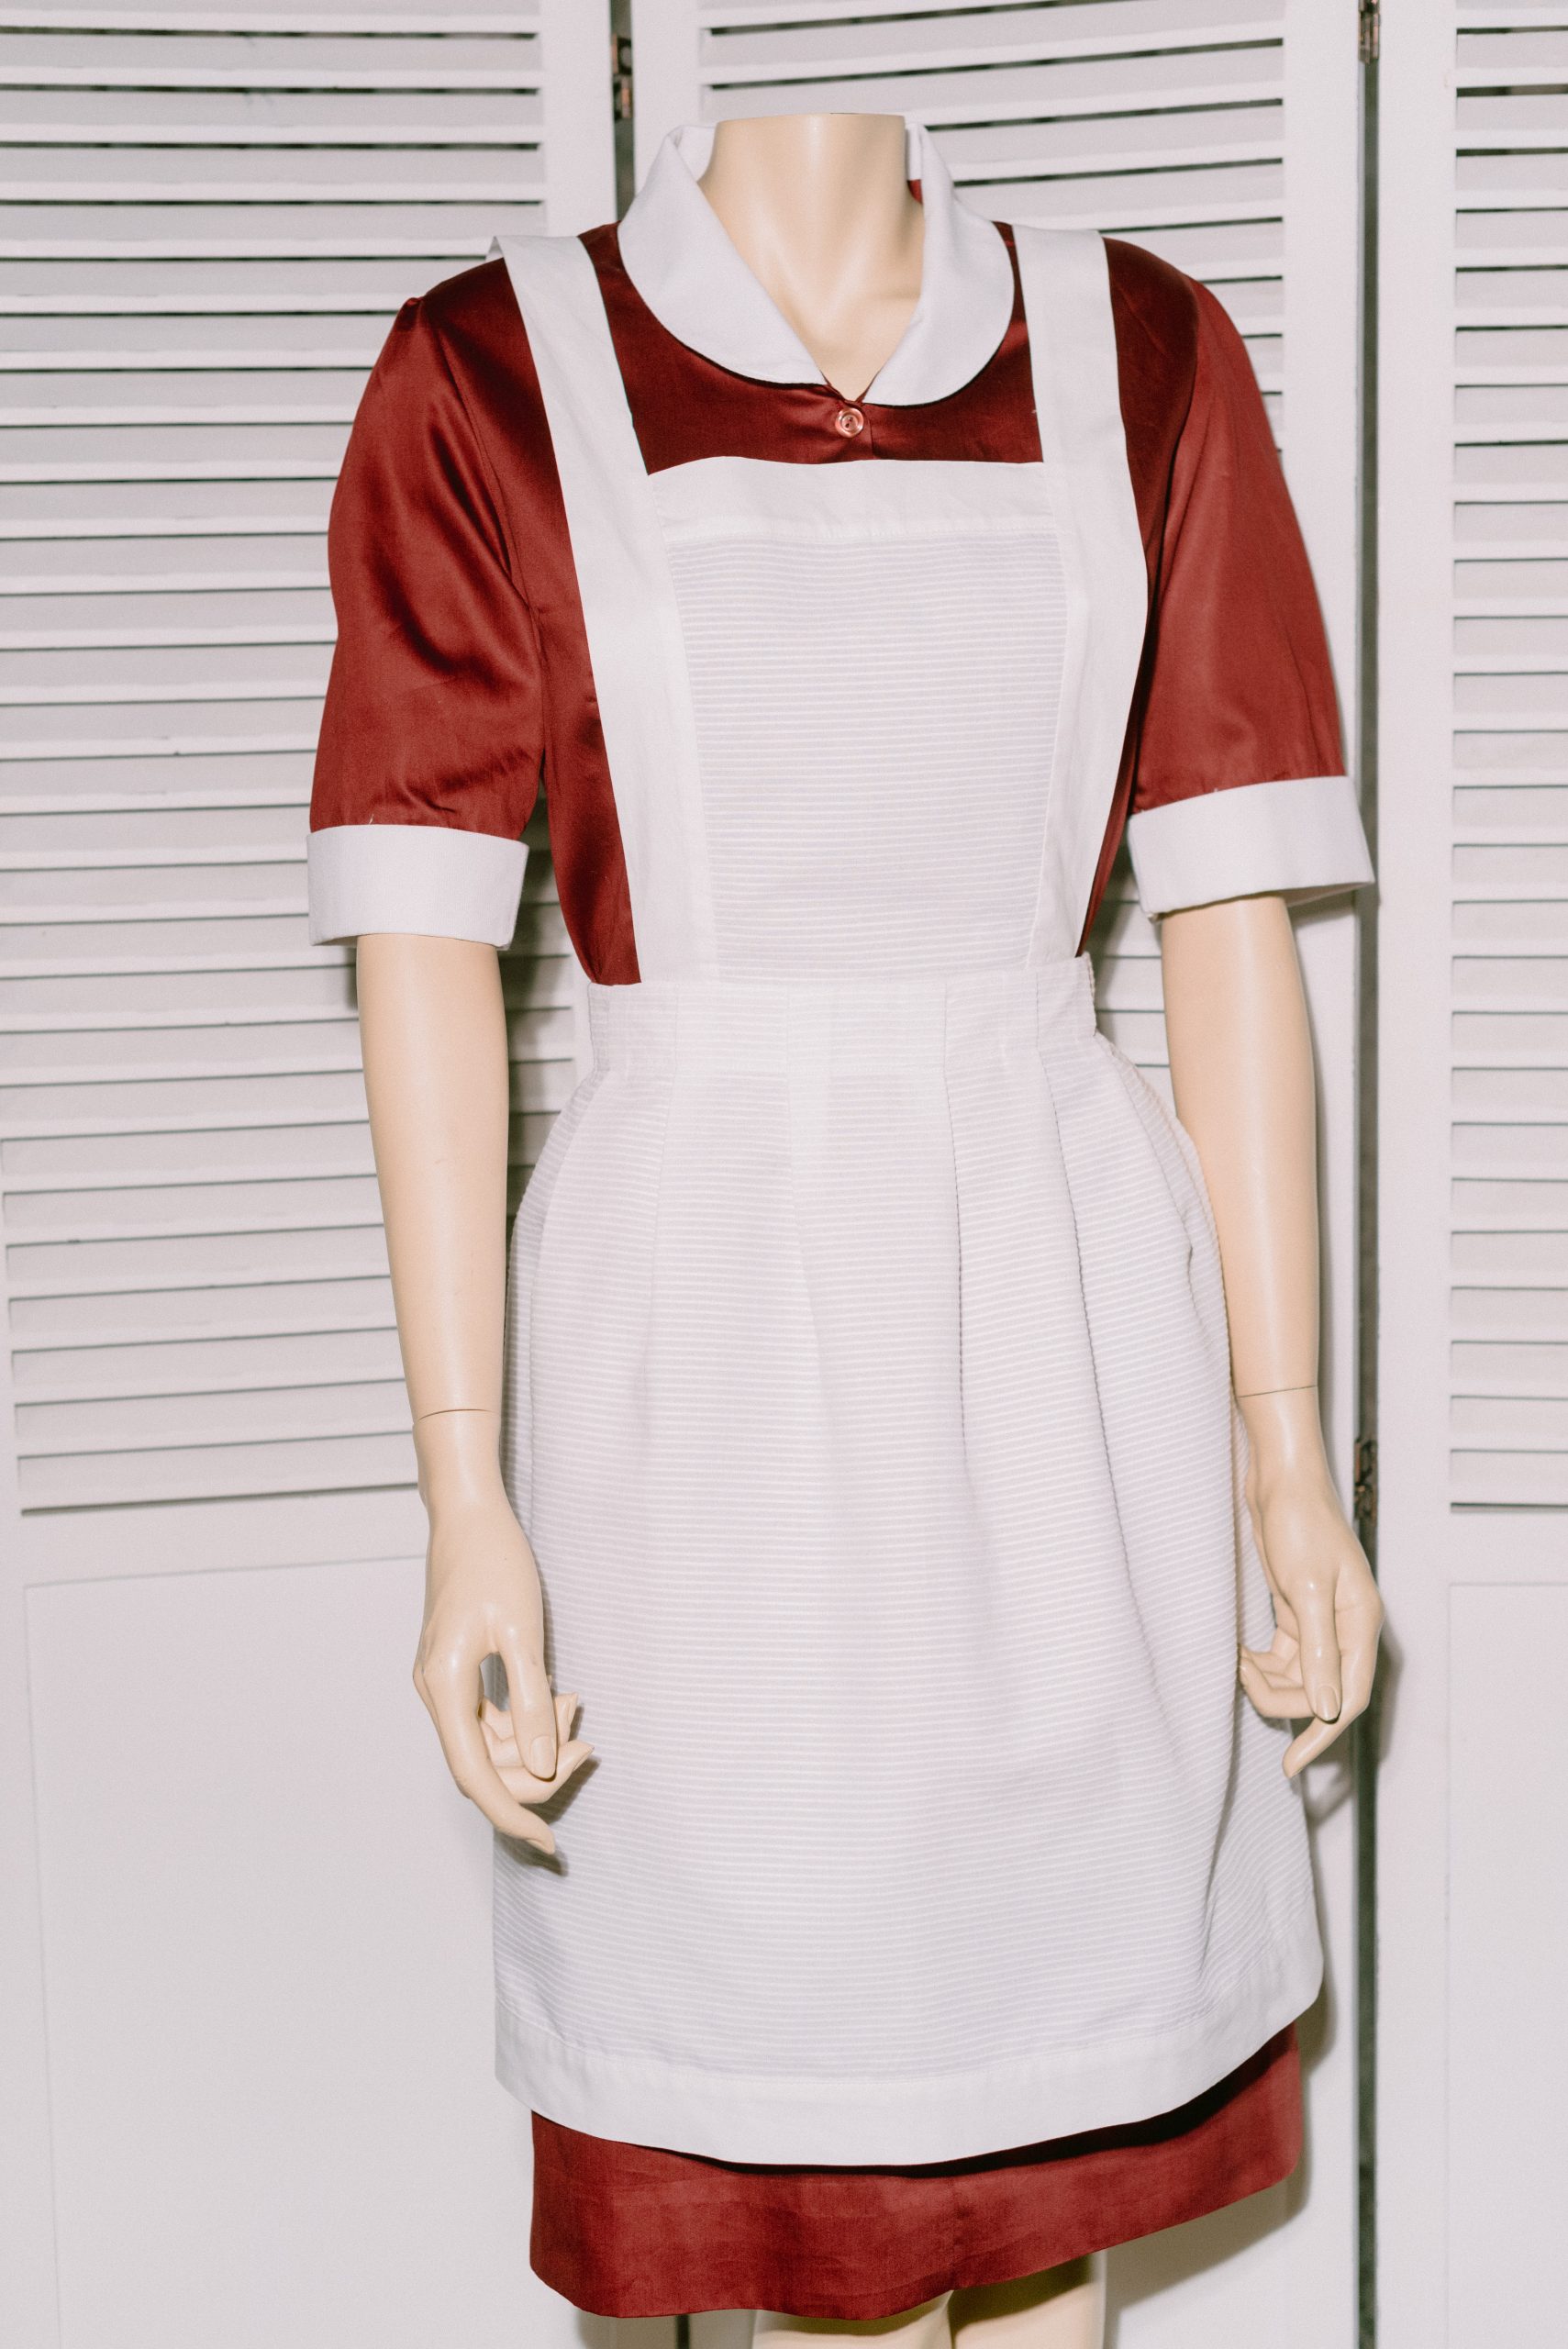 siargao maid uniform